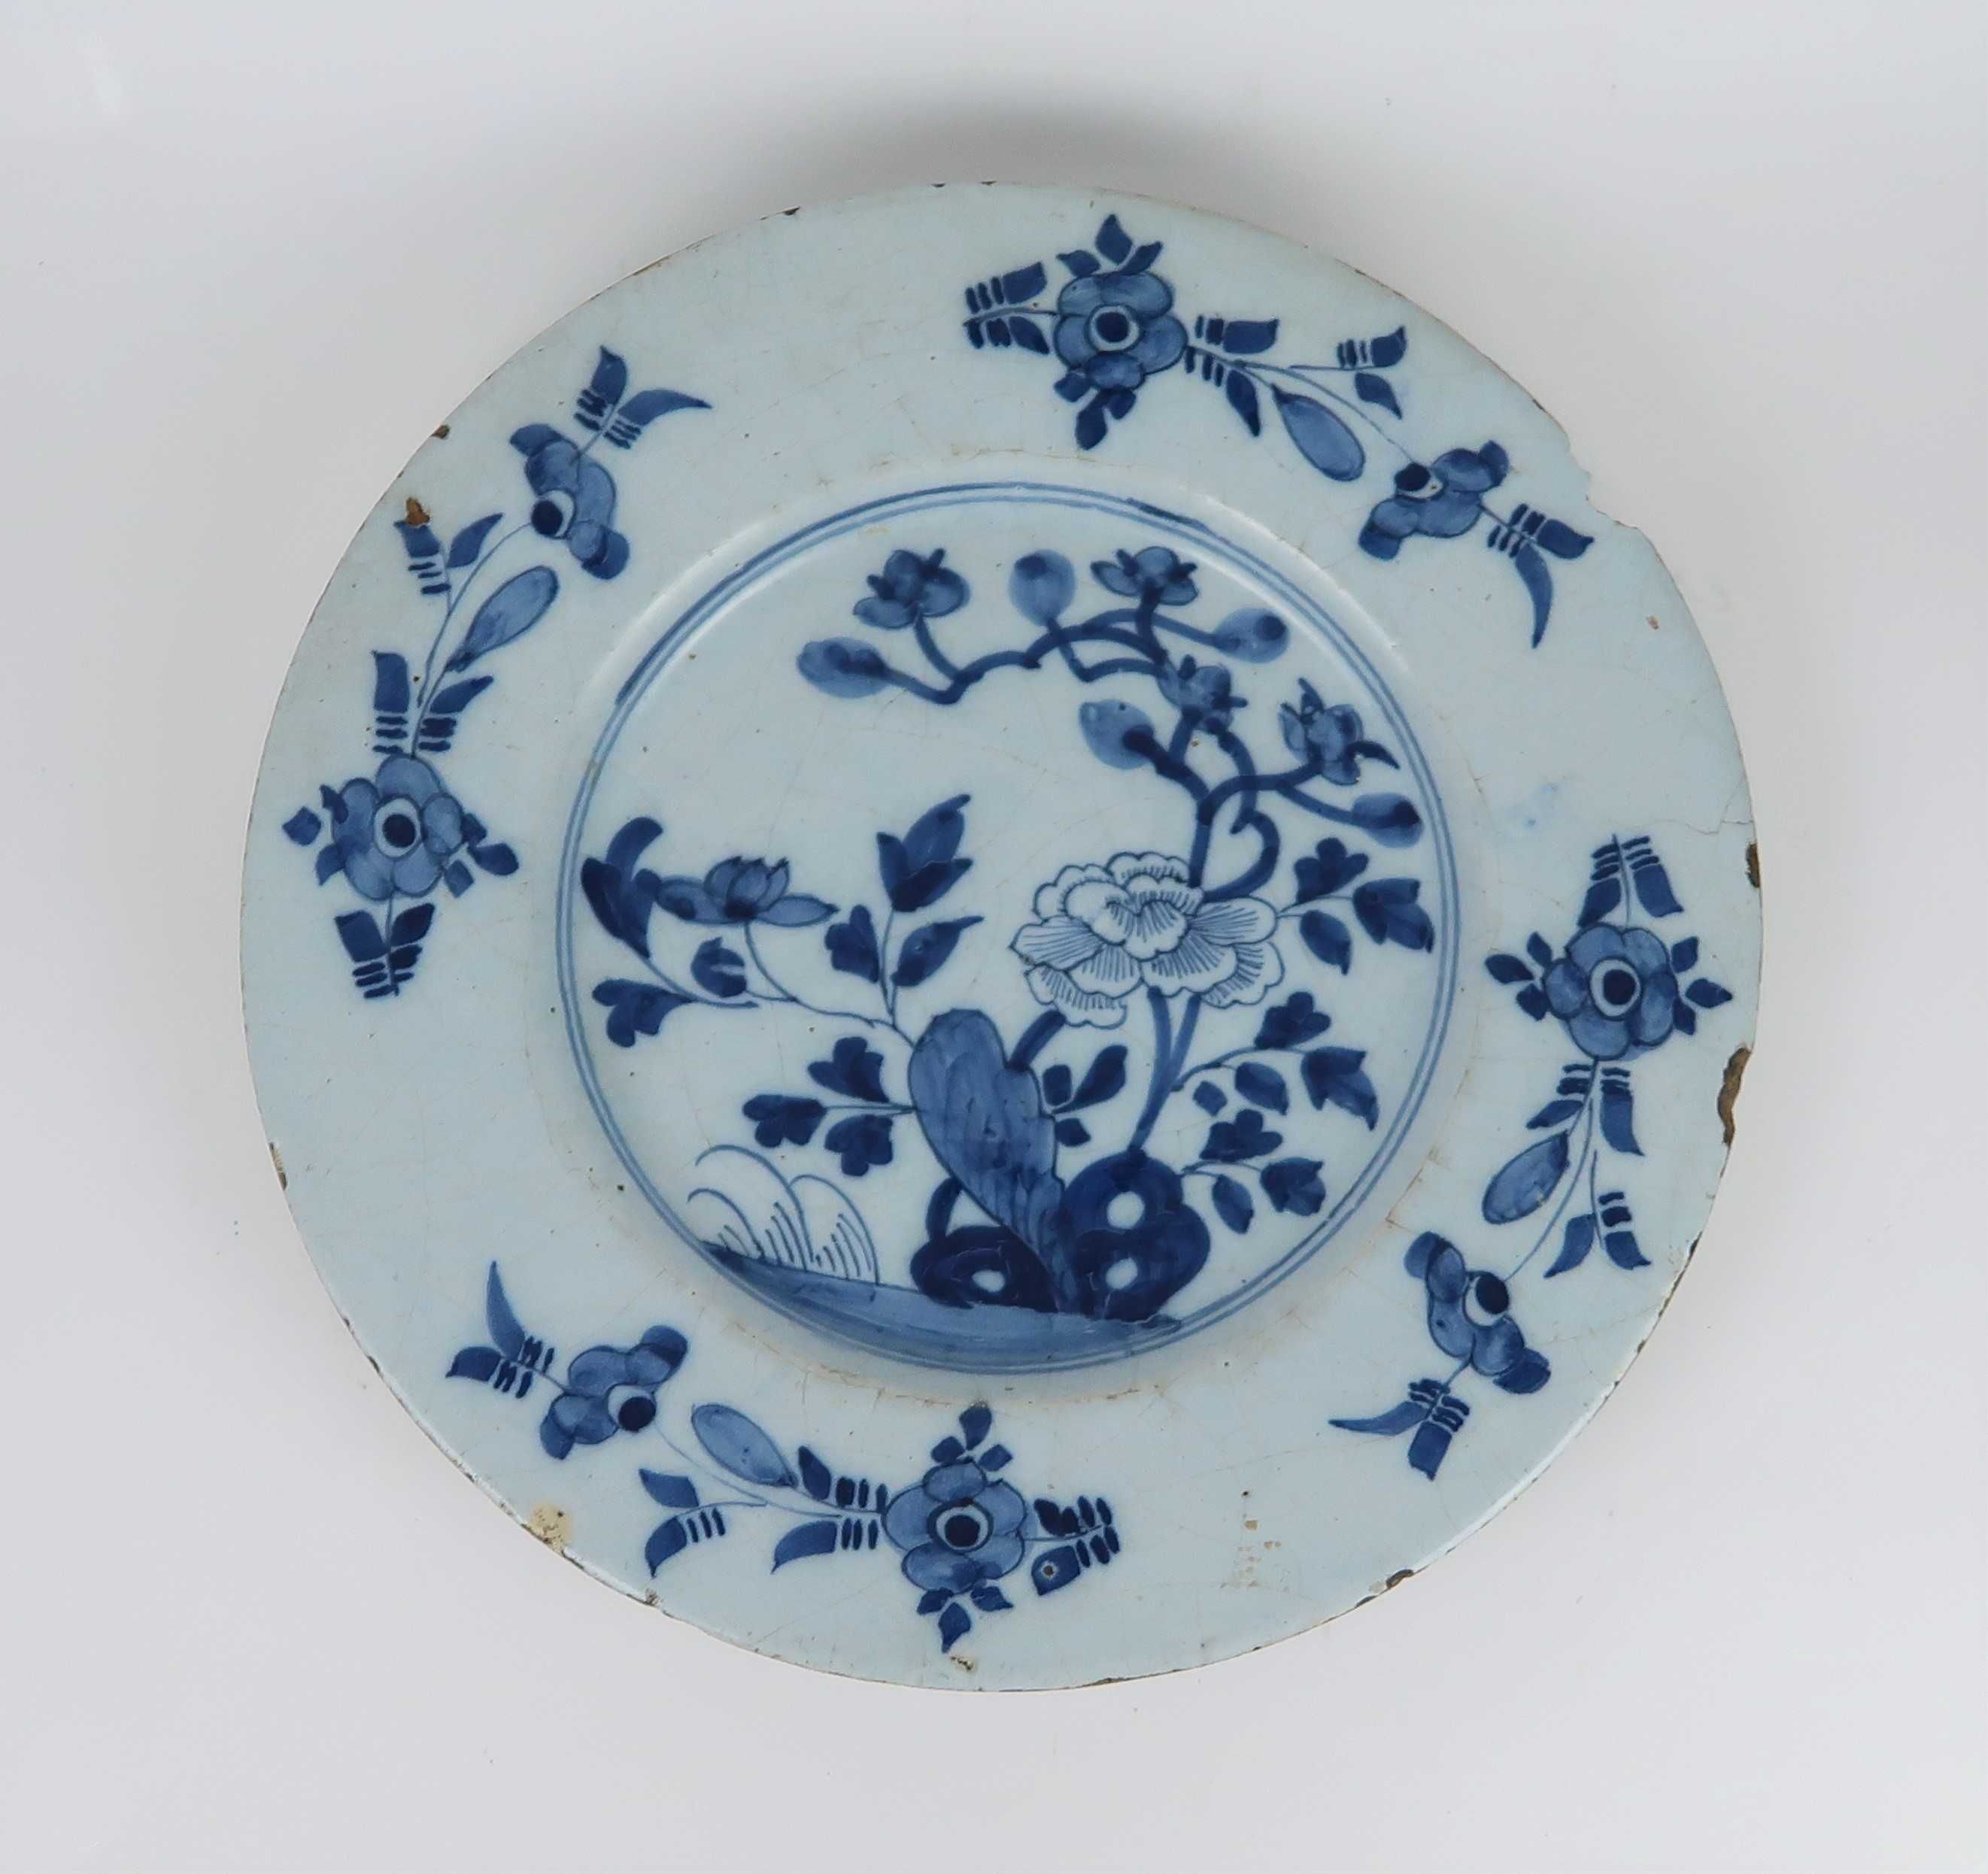 Prato Cerâmica azul e branca Séc. XVII / XVIII (Ref. 1)